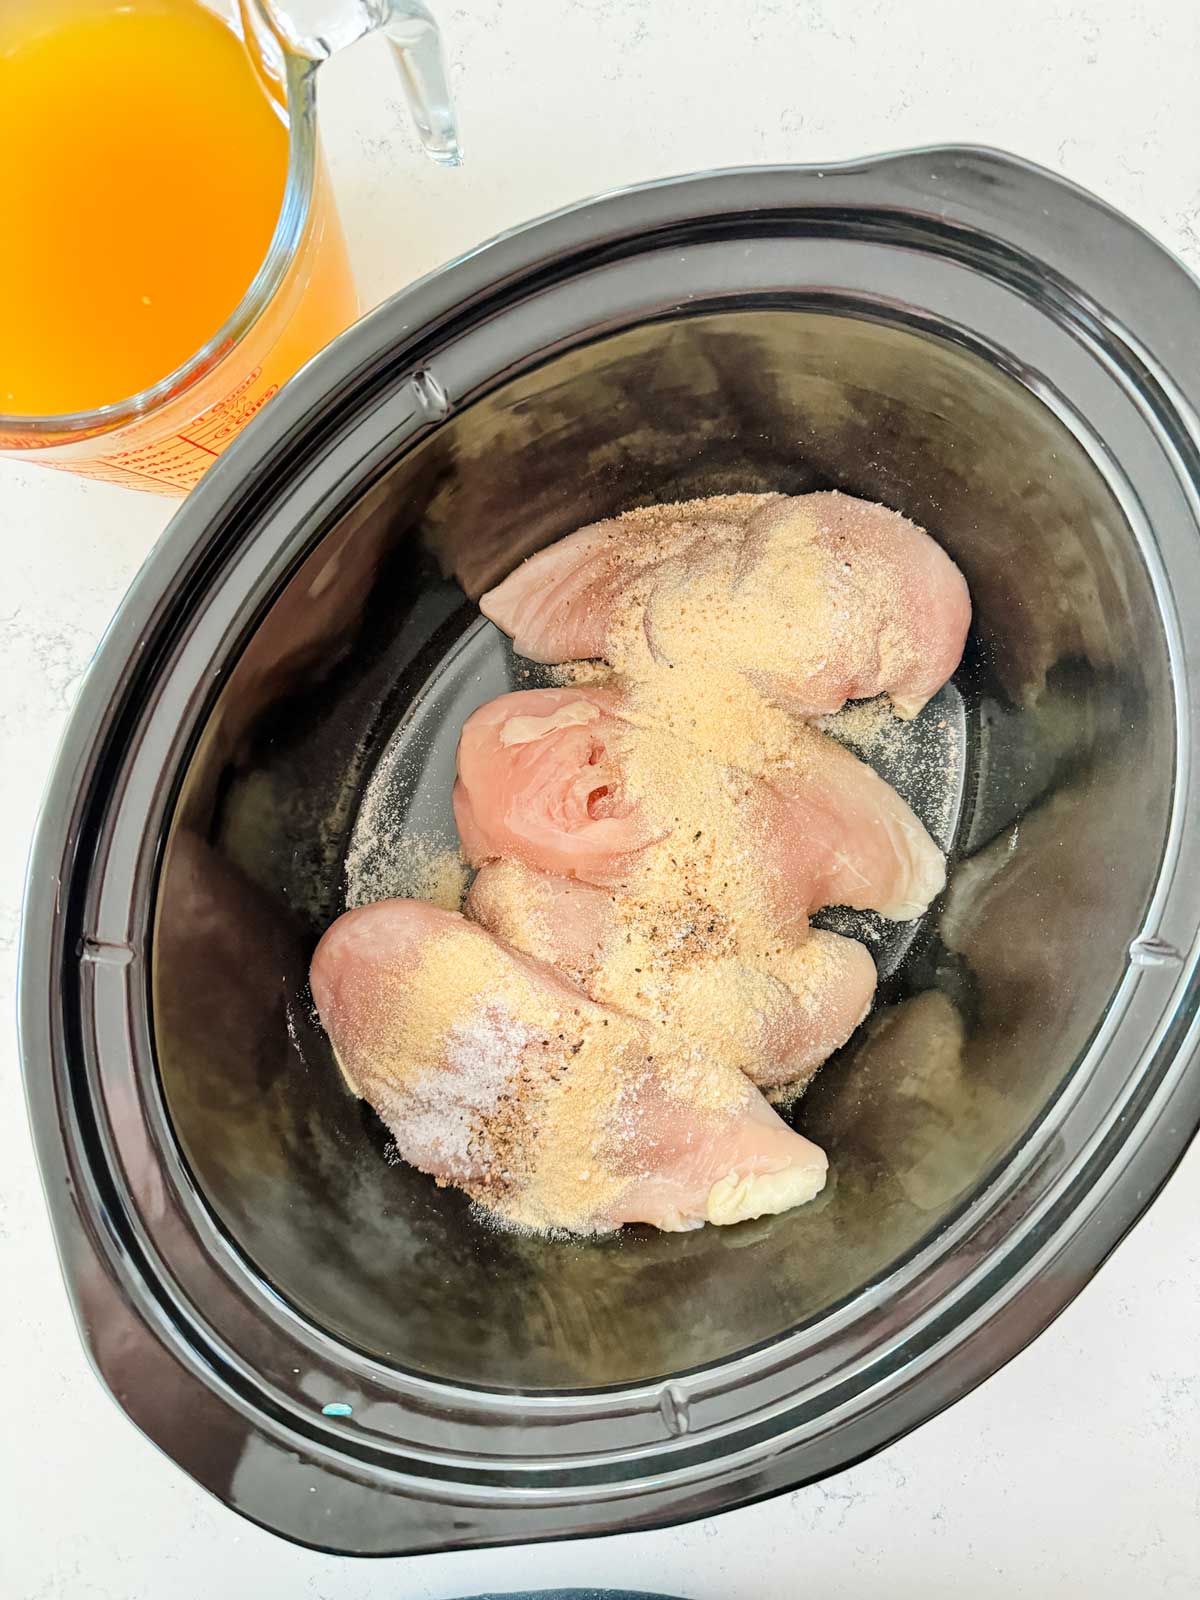 Seasonings over chicken breast in a slow cooker.